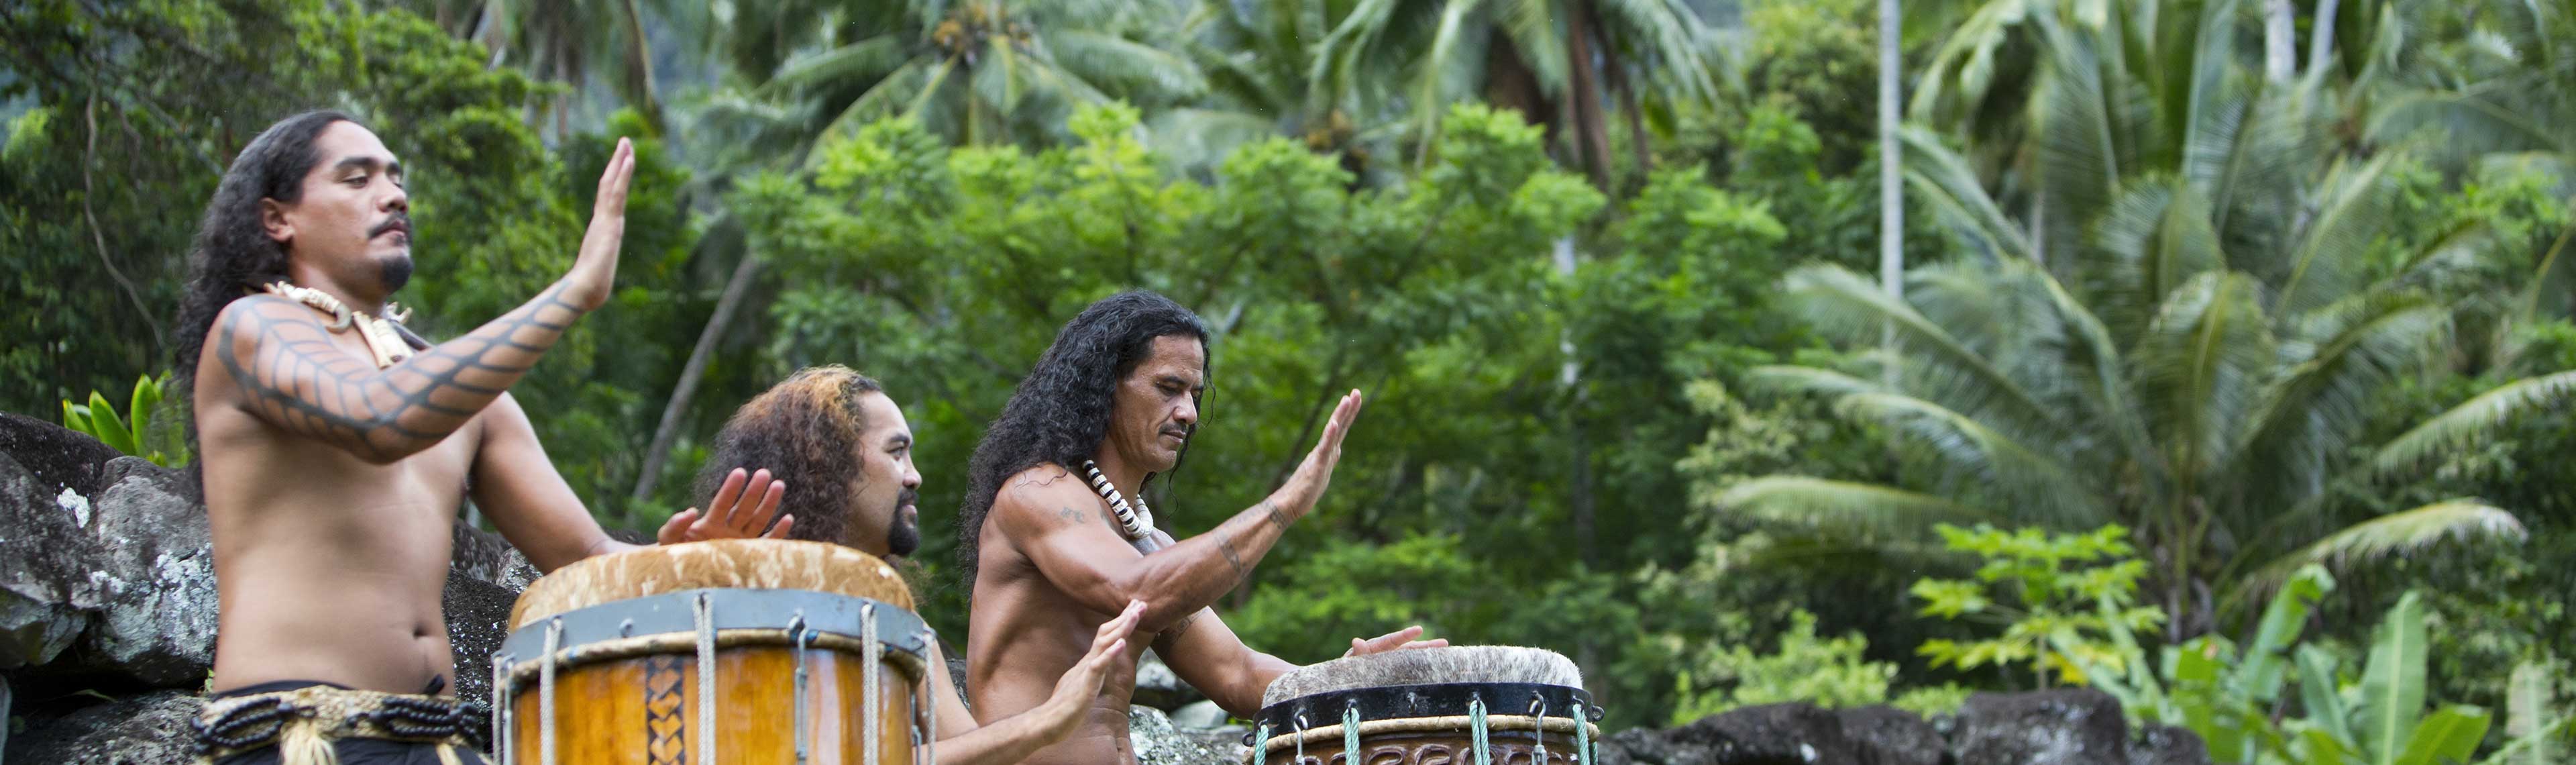 Tahiti festivals and events